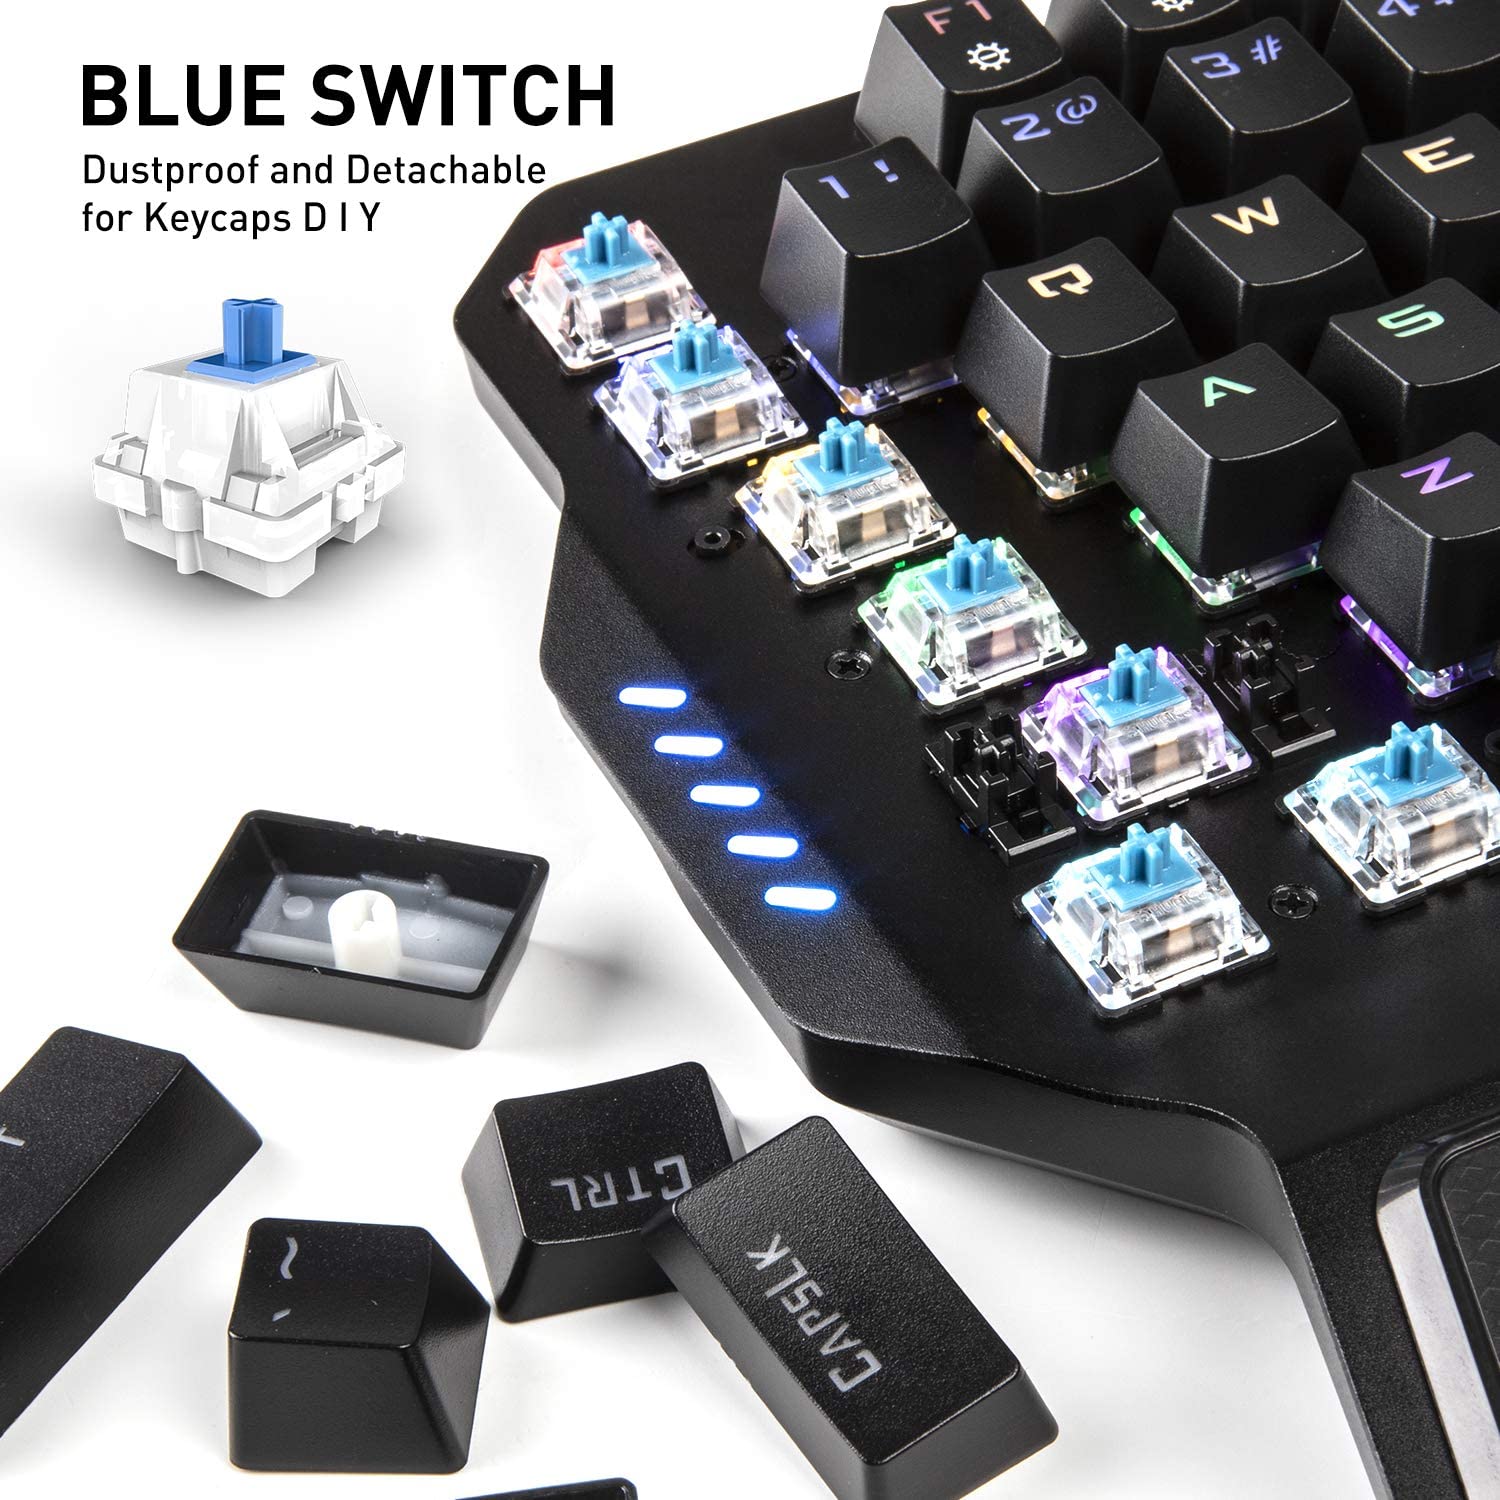 HAVIT RK-B20 One Hand RGB Gaming Keyboard & Programmable Mouse Combo - 36 Keys USB Keypad with Wrist Rest